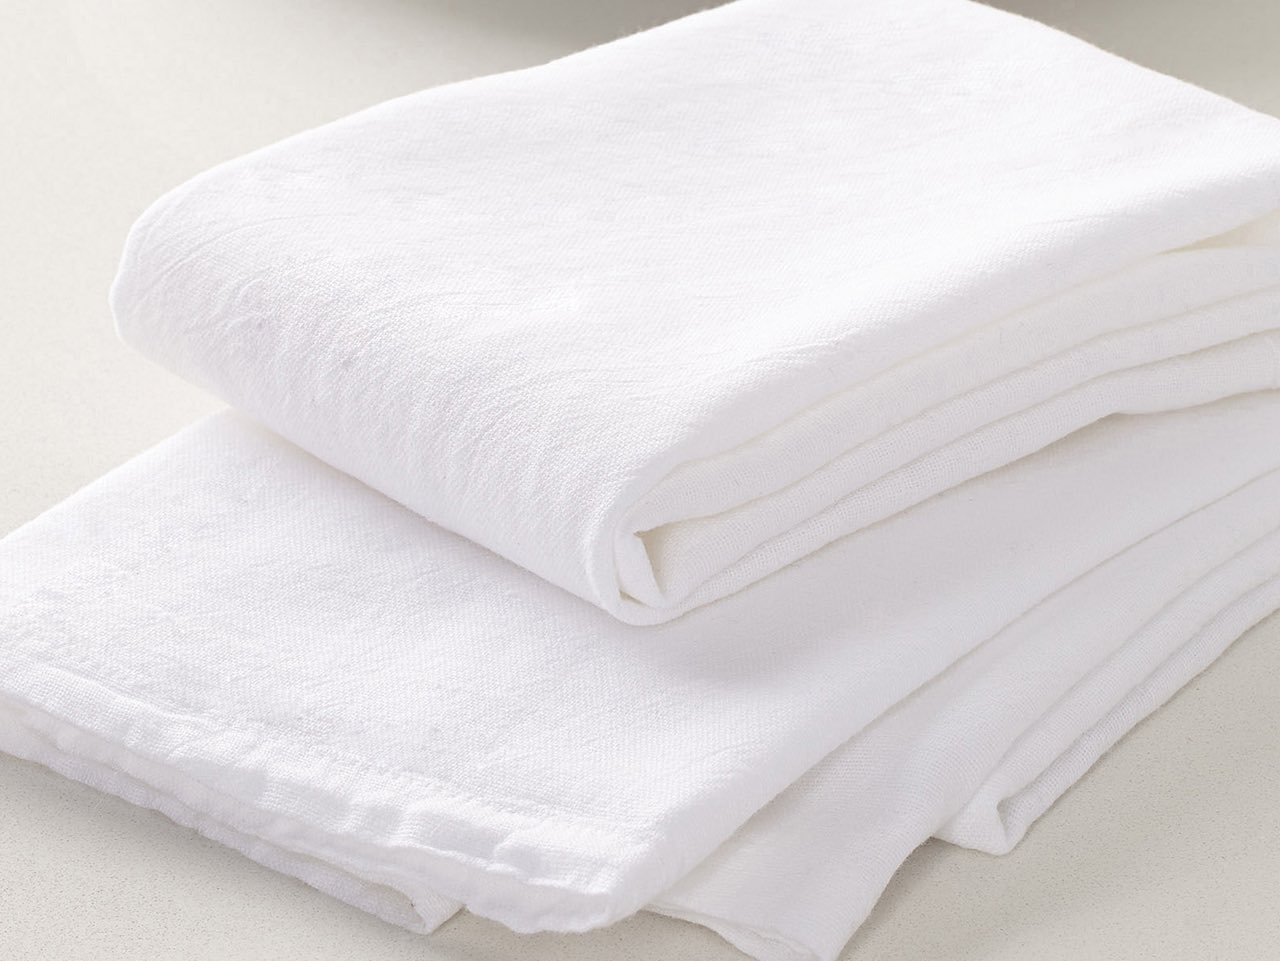 https://chatelaine.com/wp-content/uploads/2019/01/flour-sack-towels.jpg